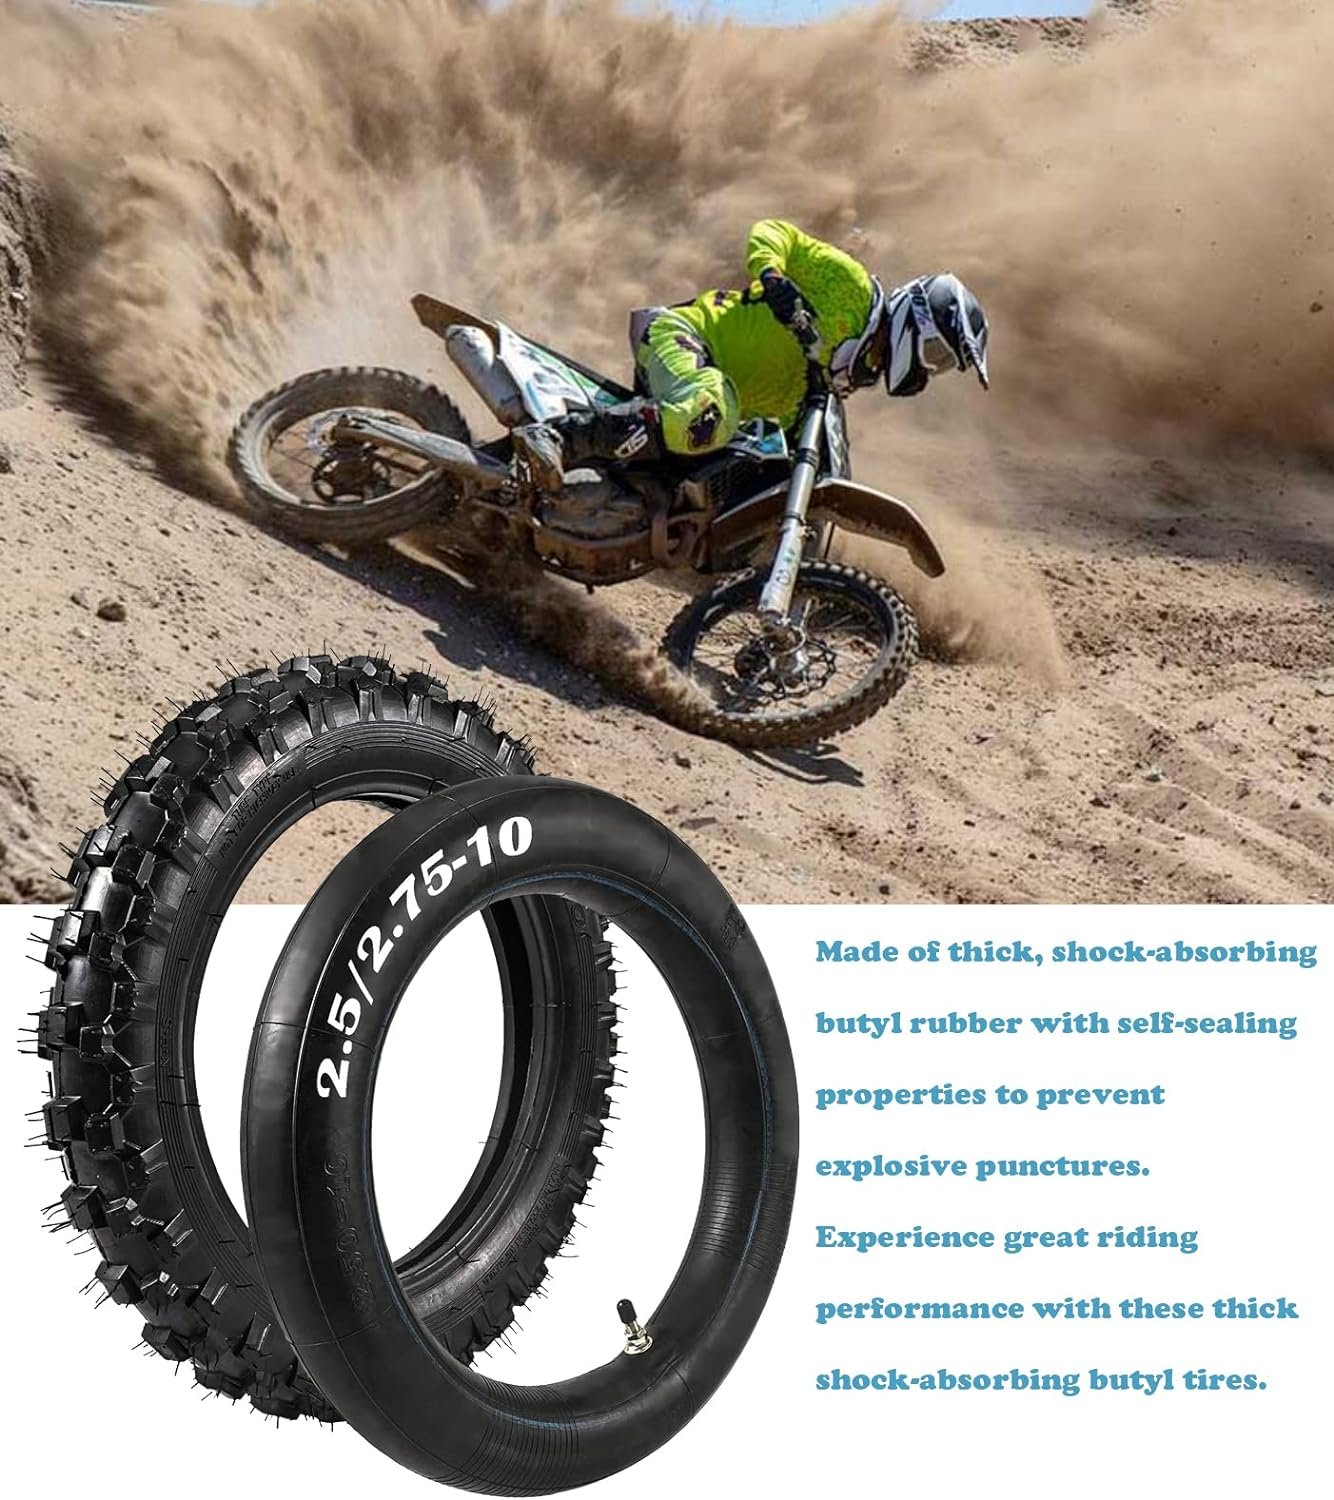 High-quality 2.5-10 Dirt Bike Tire Review